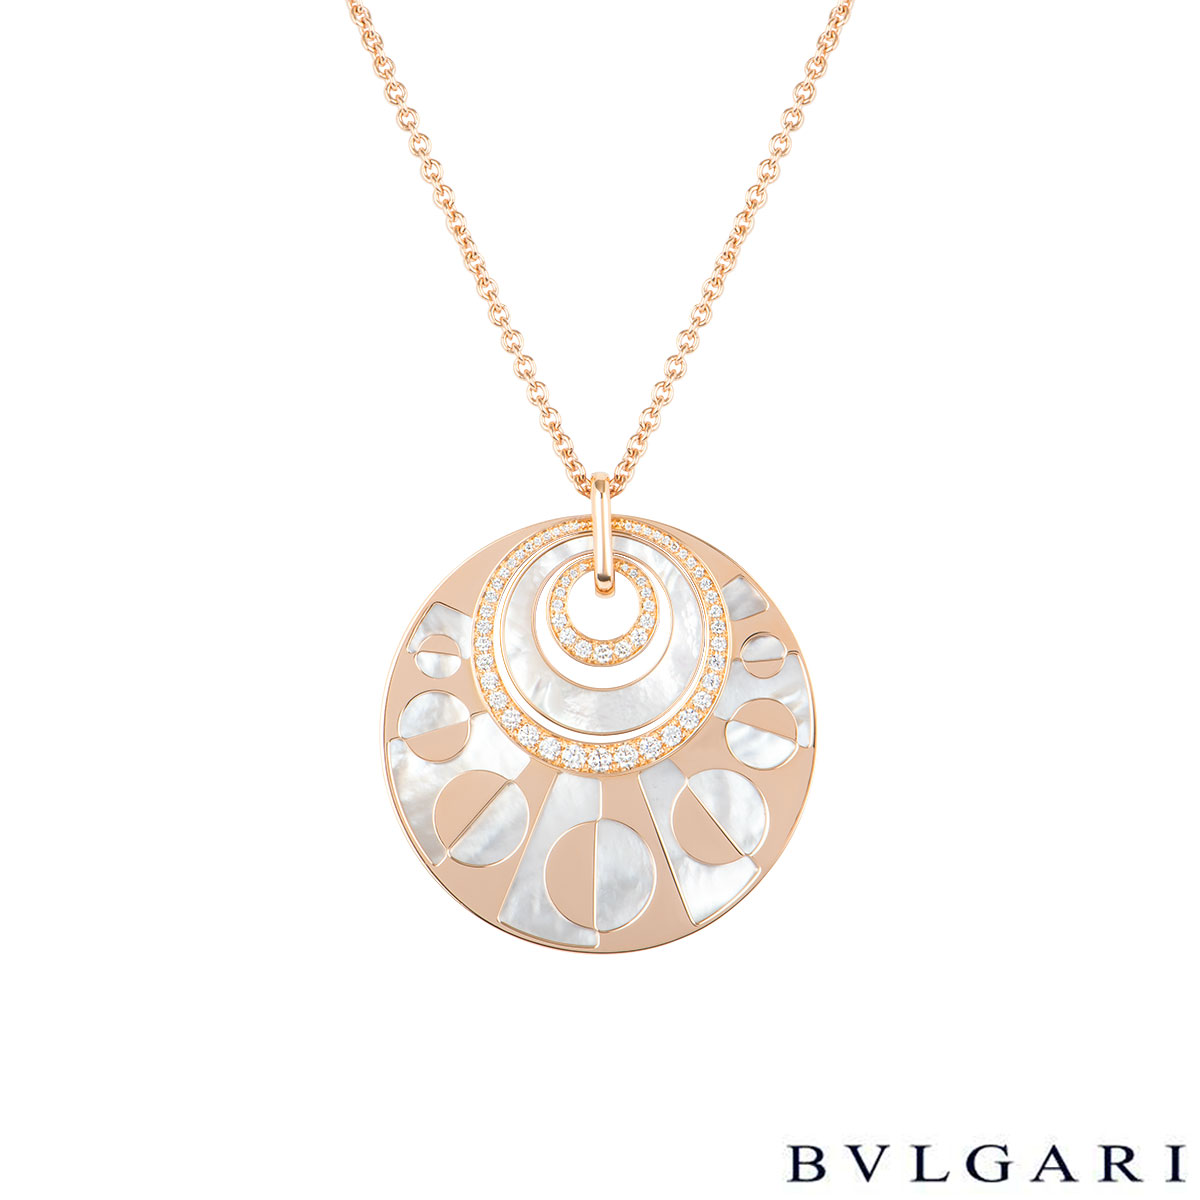 Bvlgari Rose Gold Intarsio Necklace 